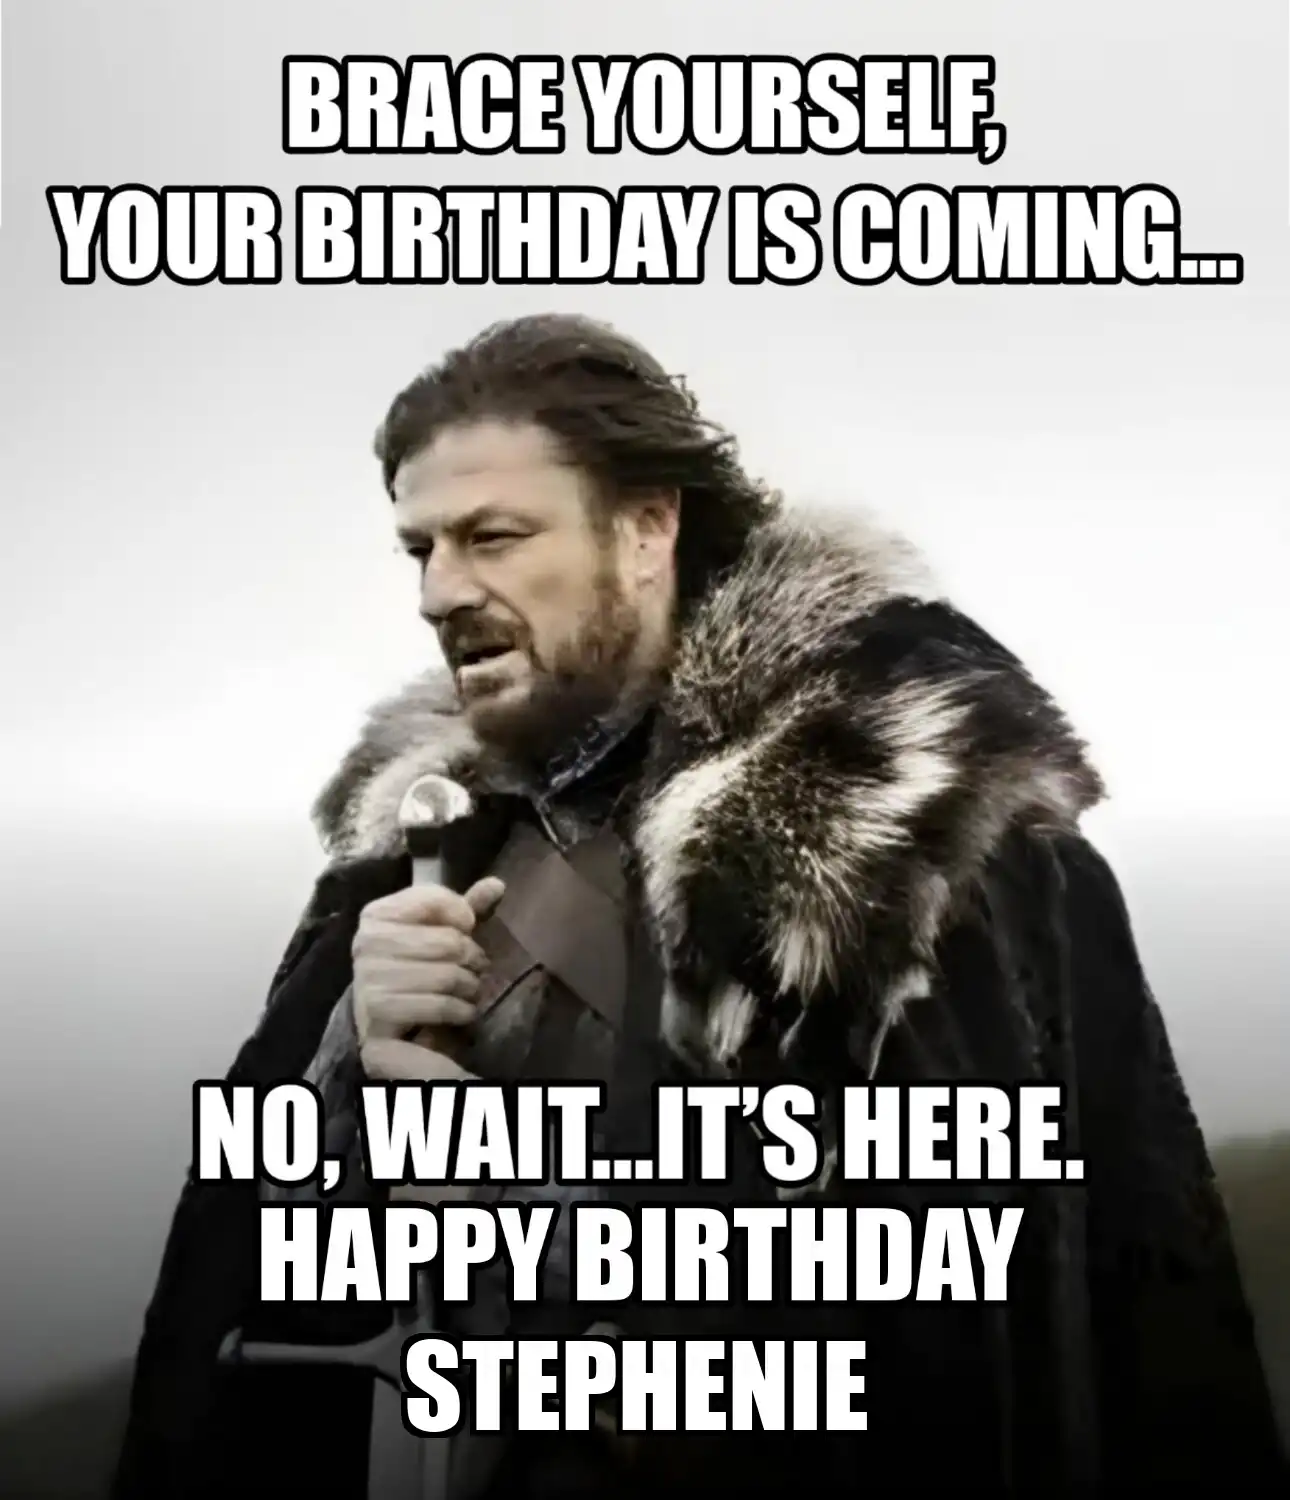 Happy Birthday Stephenie Brace Yourself Your Birthday Is Coming Meme